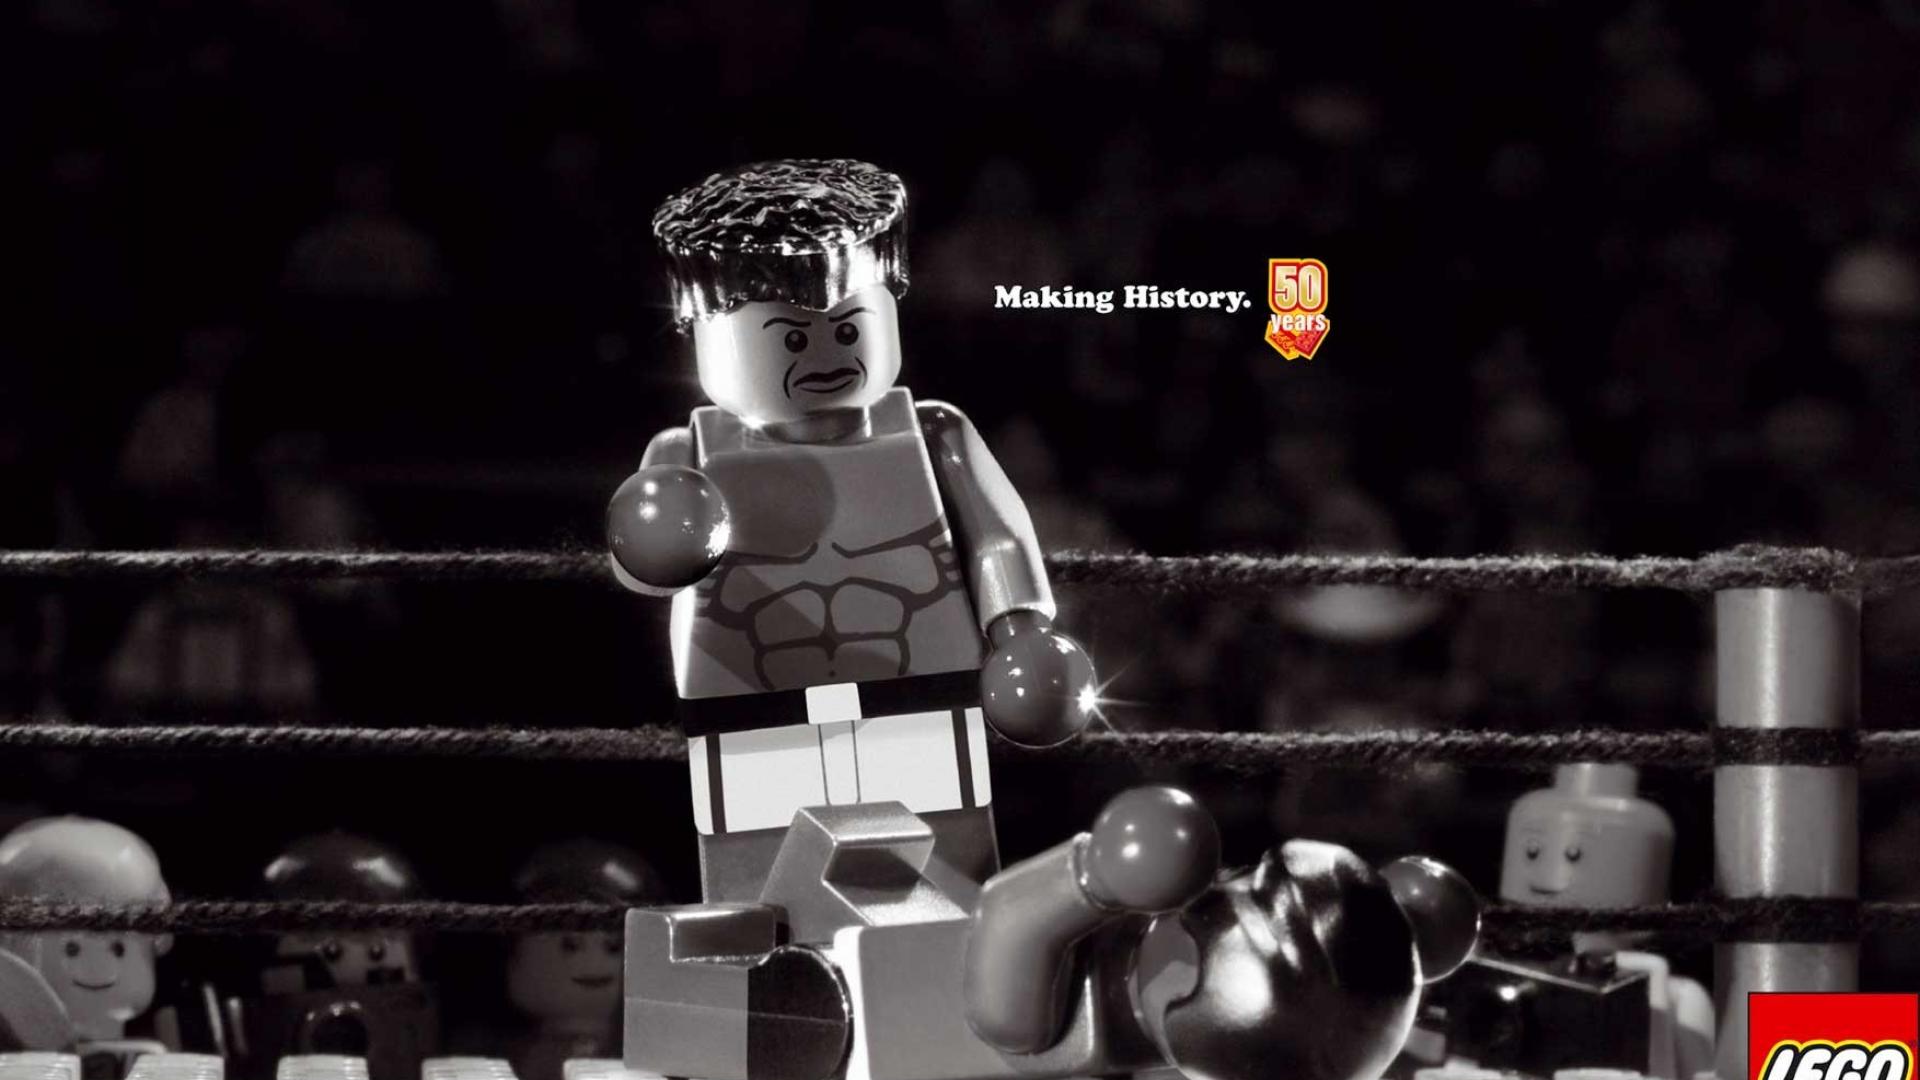 Boxing Muhammad Ali Monochrome Historic Anniversary Legos Association